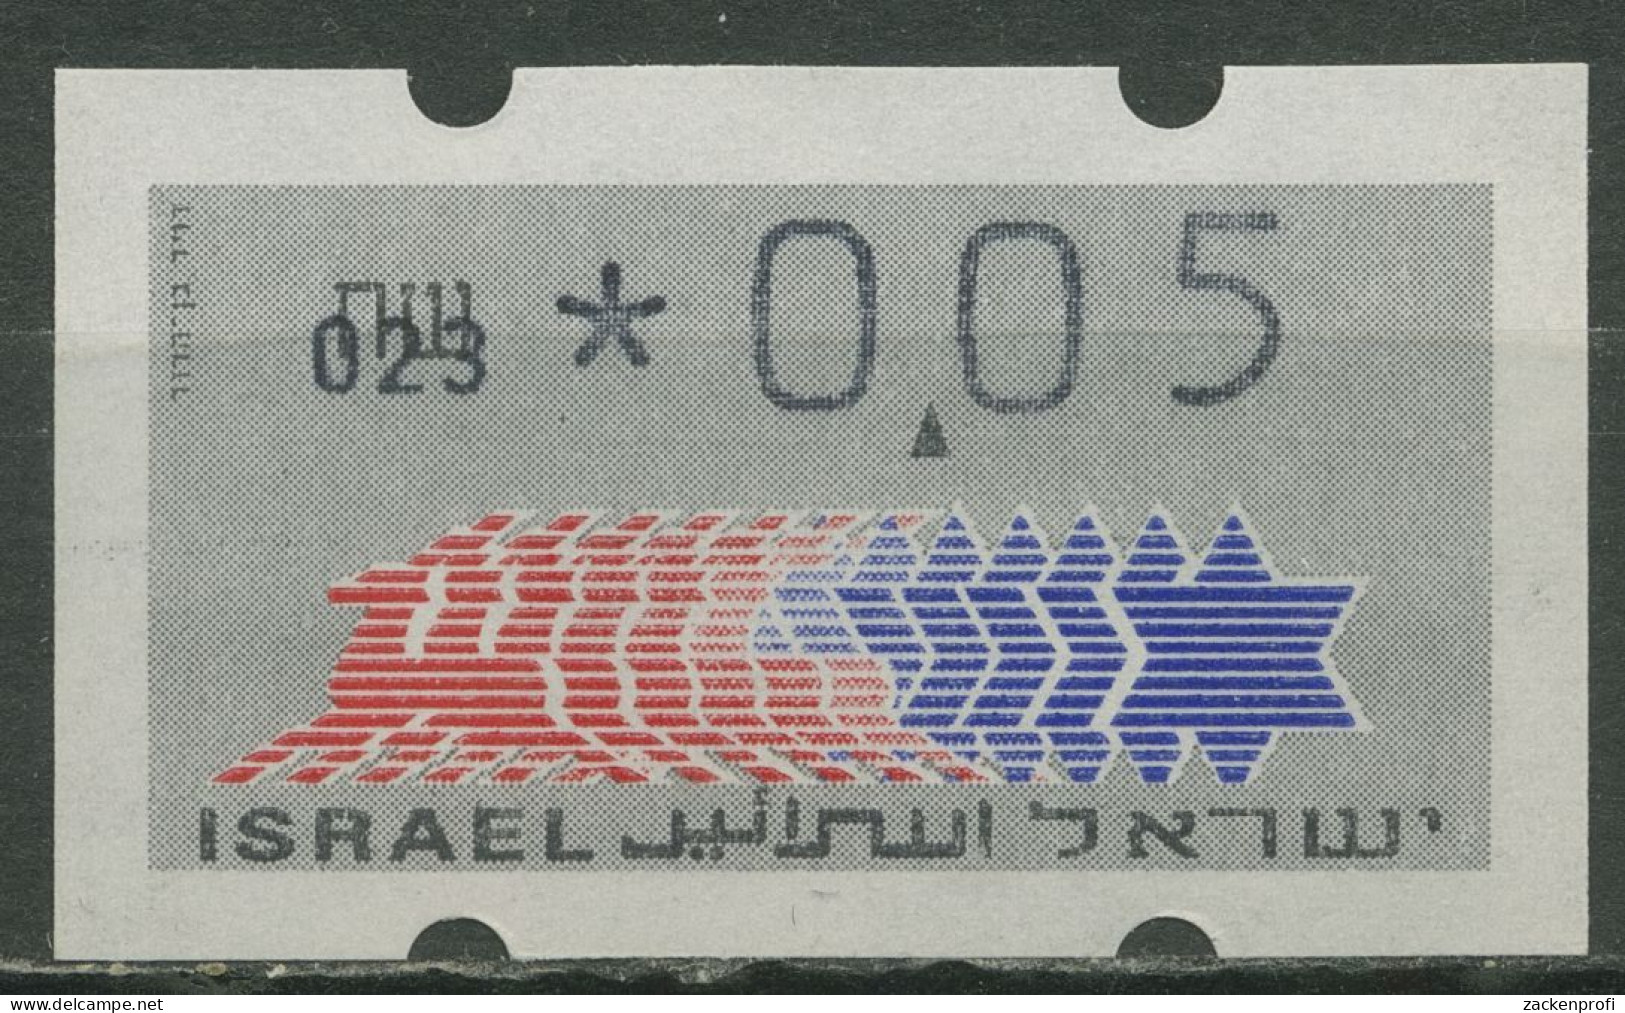 Israel ATM 1990 Hirsch Automat 023 Einzelwert ATM 3.1.23 Postfrisch - Vignettes D'affranchissement (Frama)